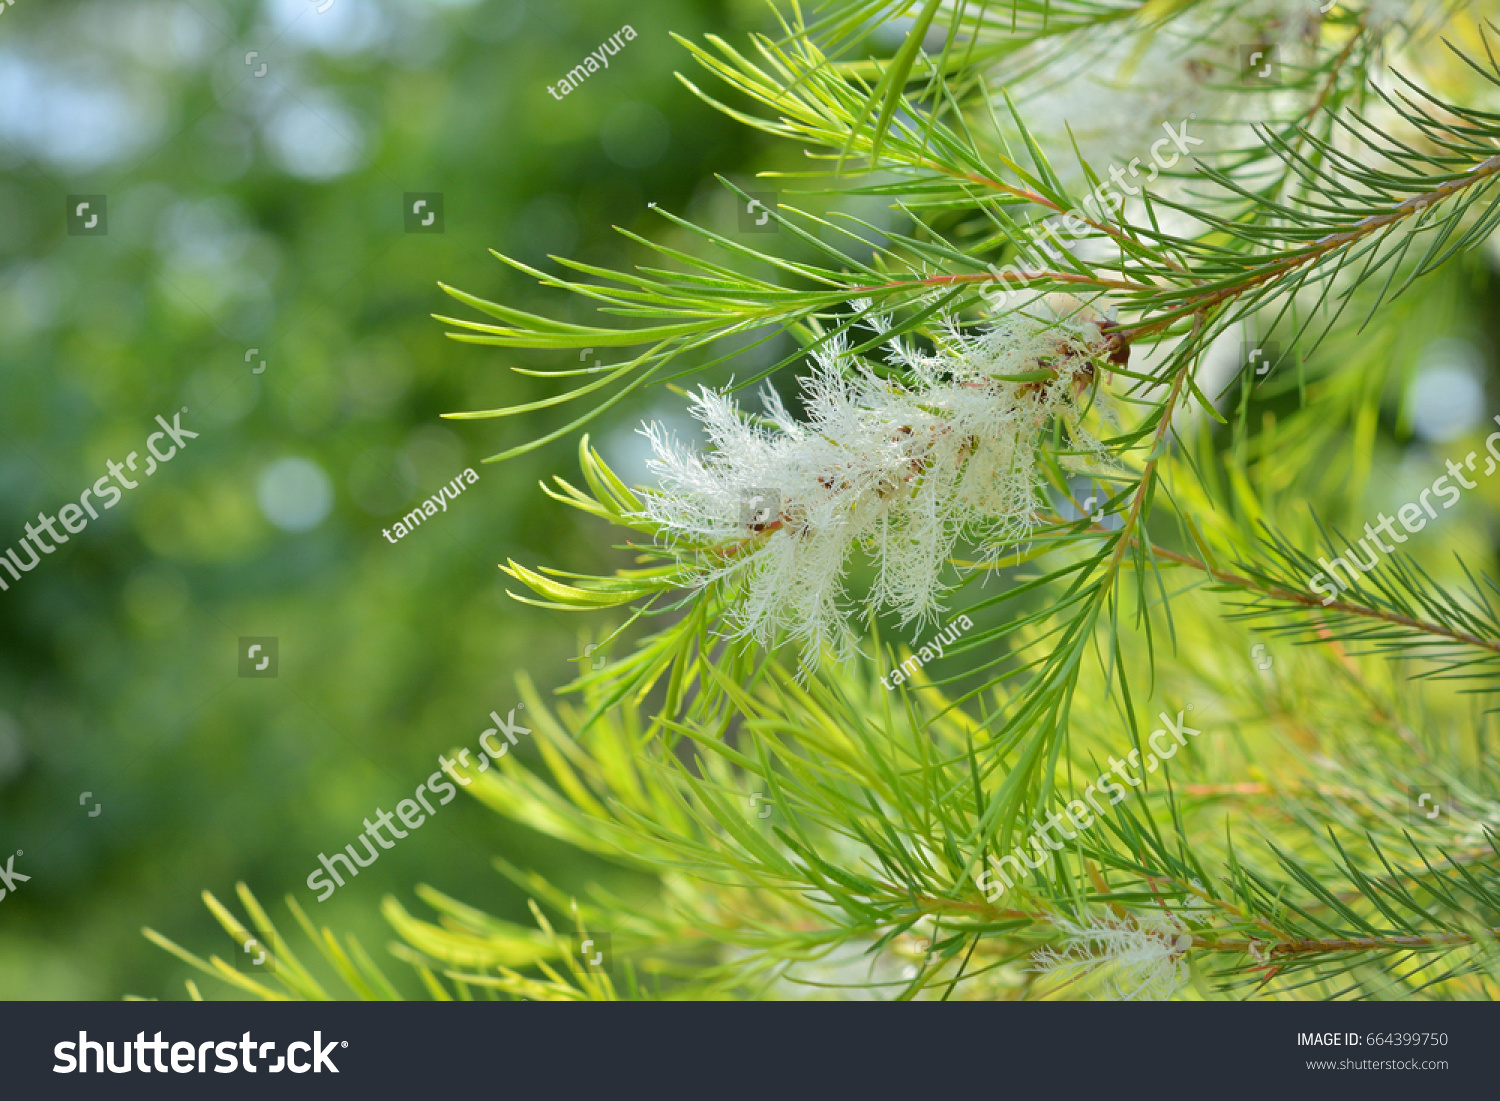 498 Melaleuca alternifolia Stock Photos, Images & Photography ...